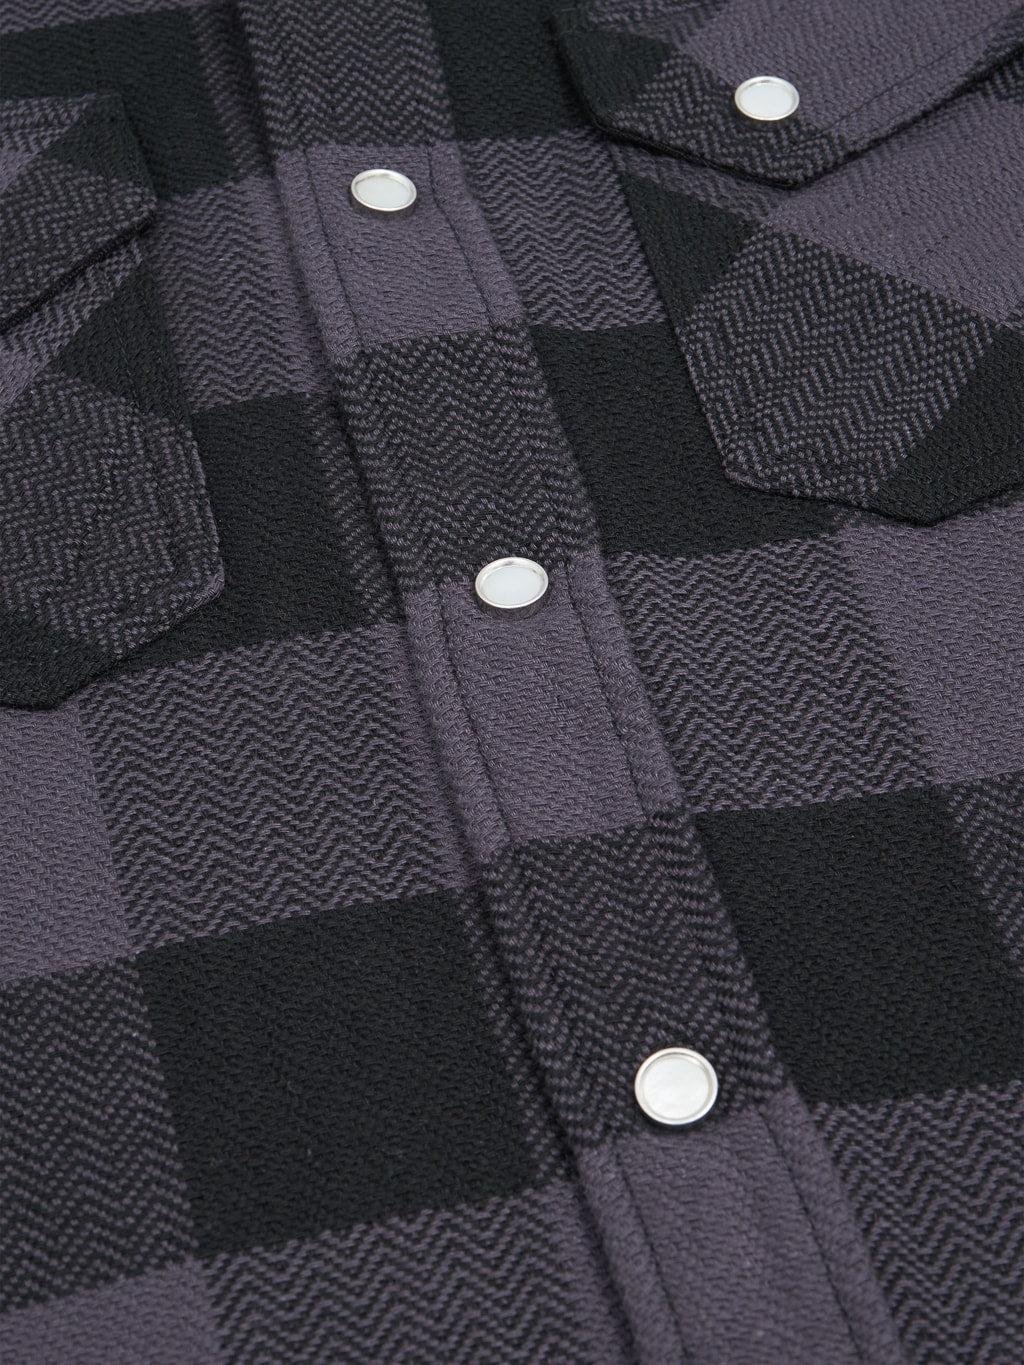 The Flat Head Block Check Flannel Western Shirt Grey/Black